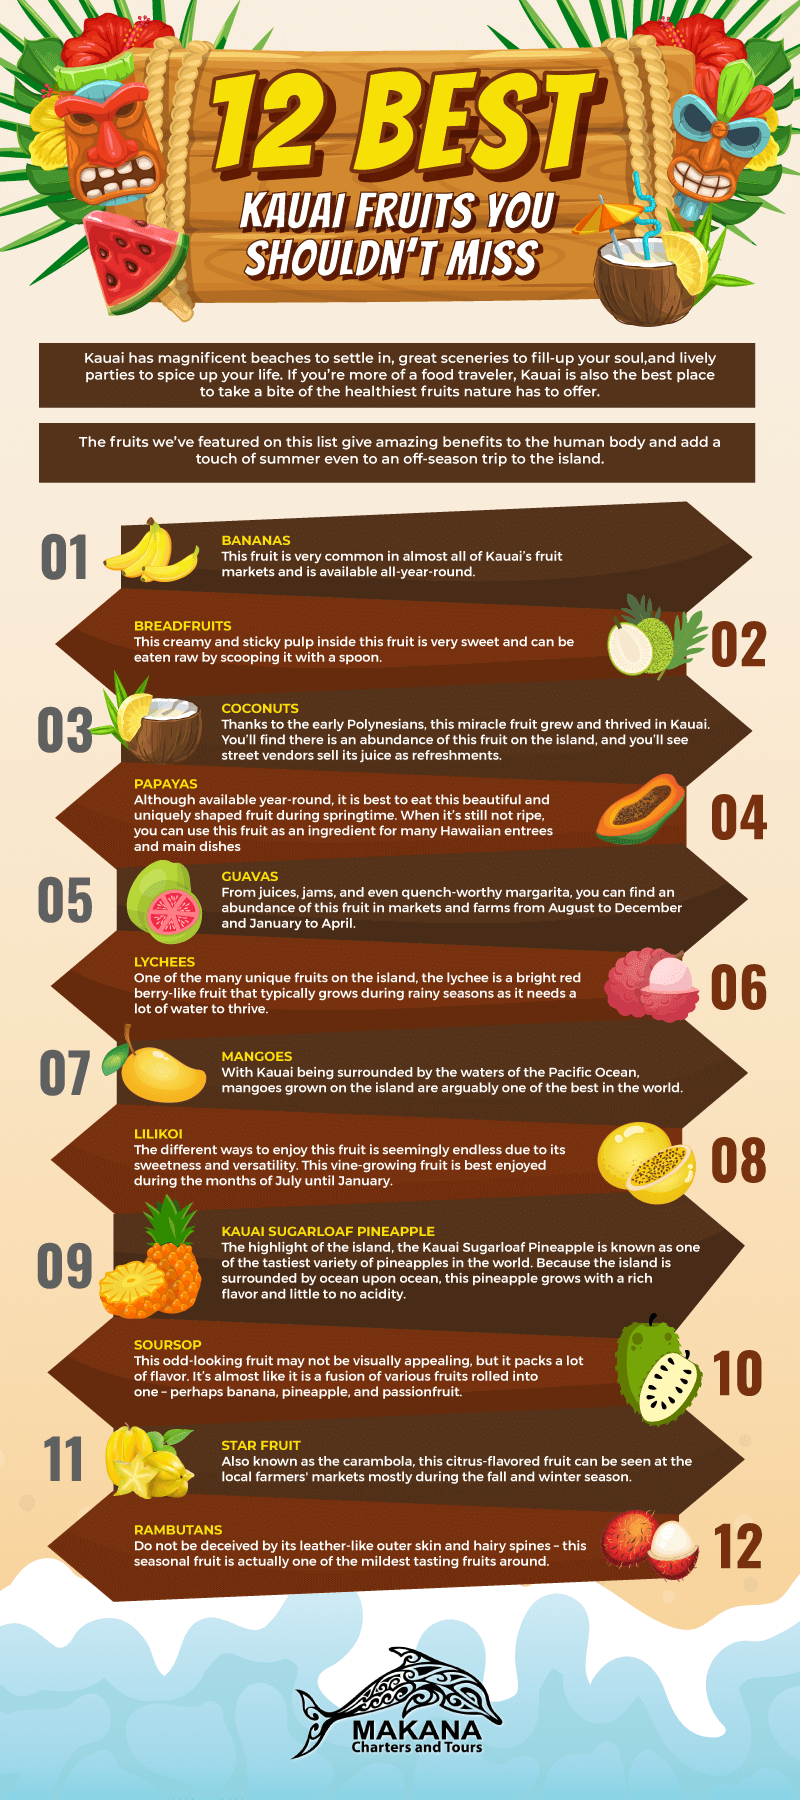 12 Best Kauai Fruits - Infographic